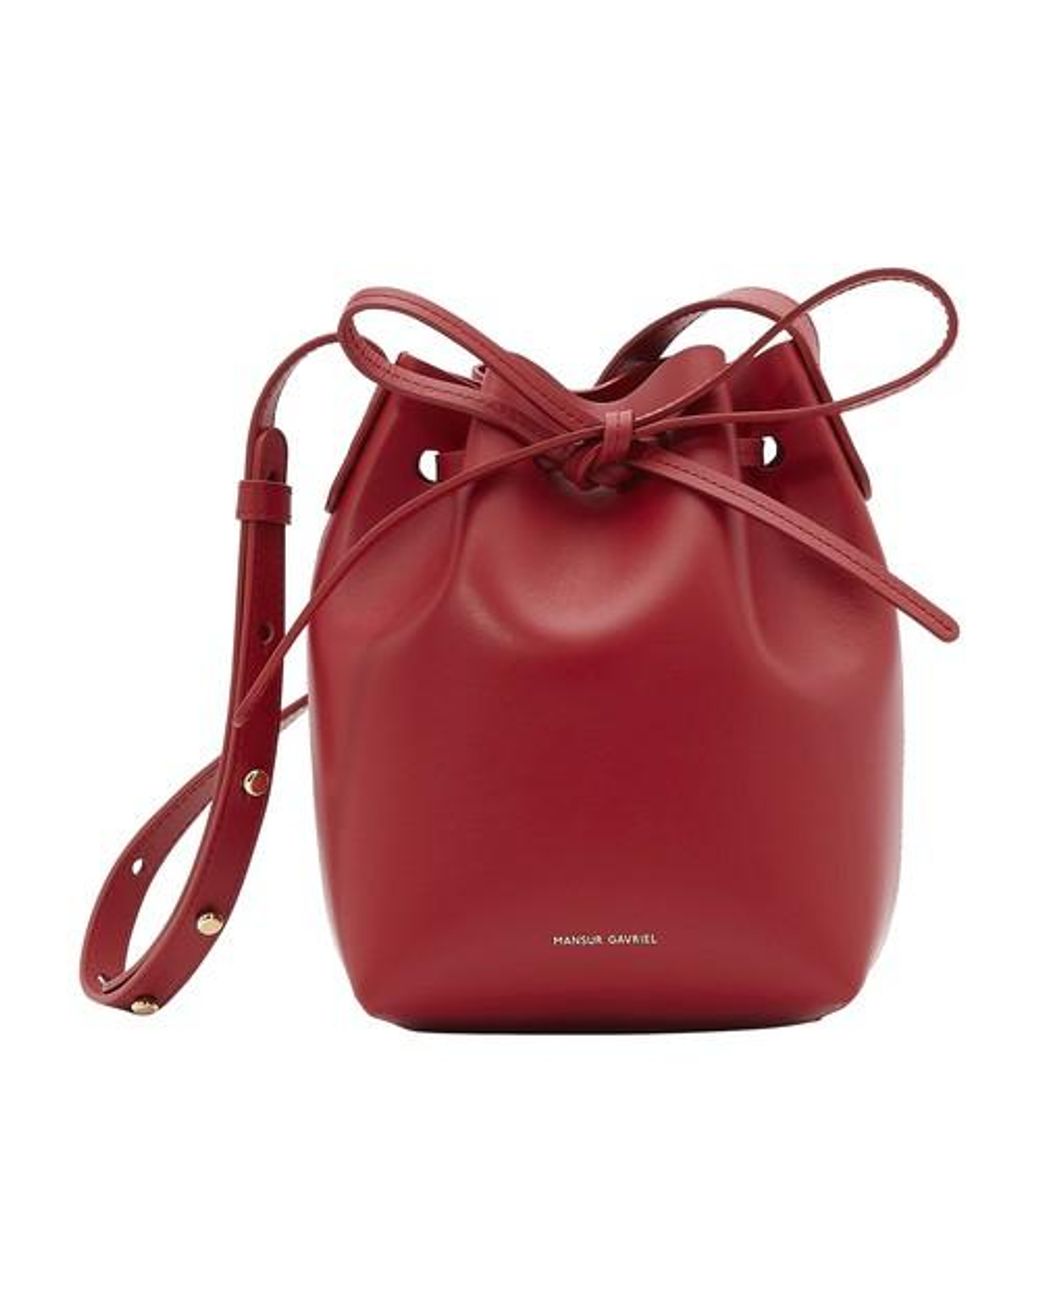 Mansur Gavriel Mini Mini Bucket Bag in Red - Lyst